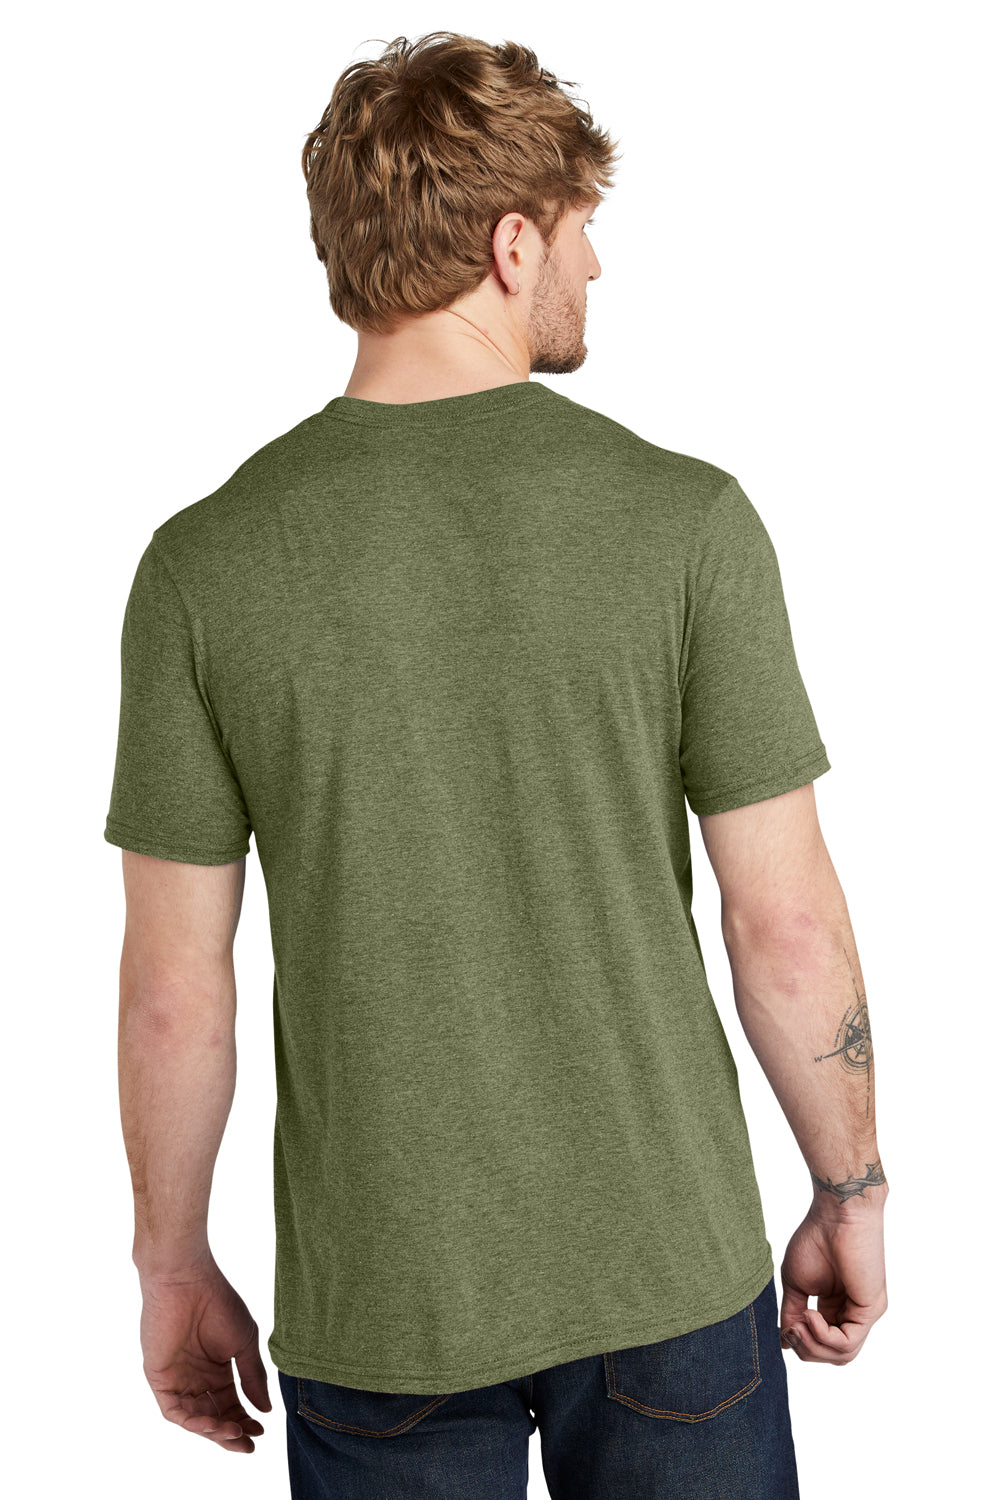 Volunteer Knitwear VL40 Short Sleeve Crewneck T-Shirt Heather Military Green Back